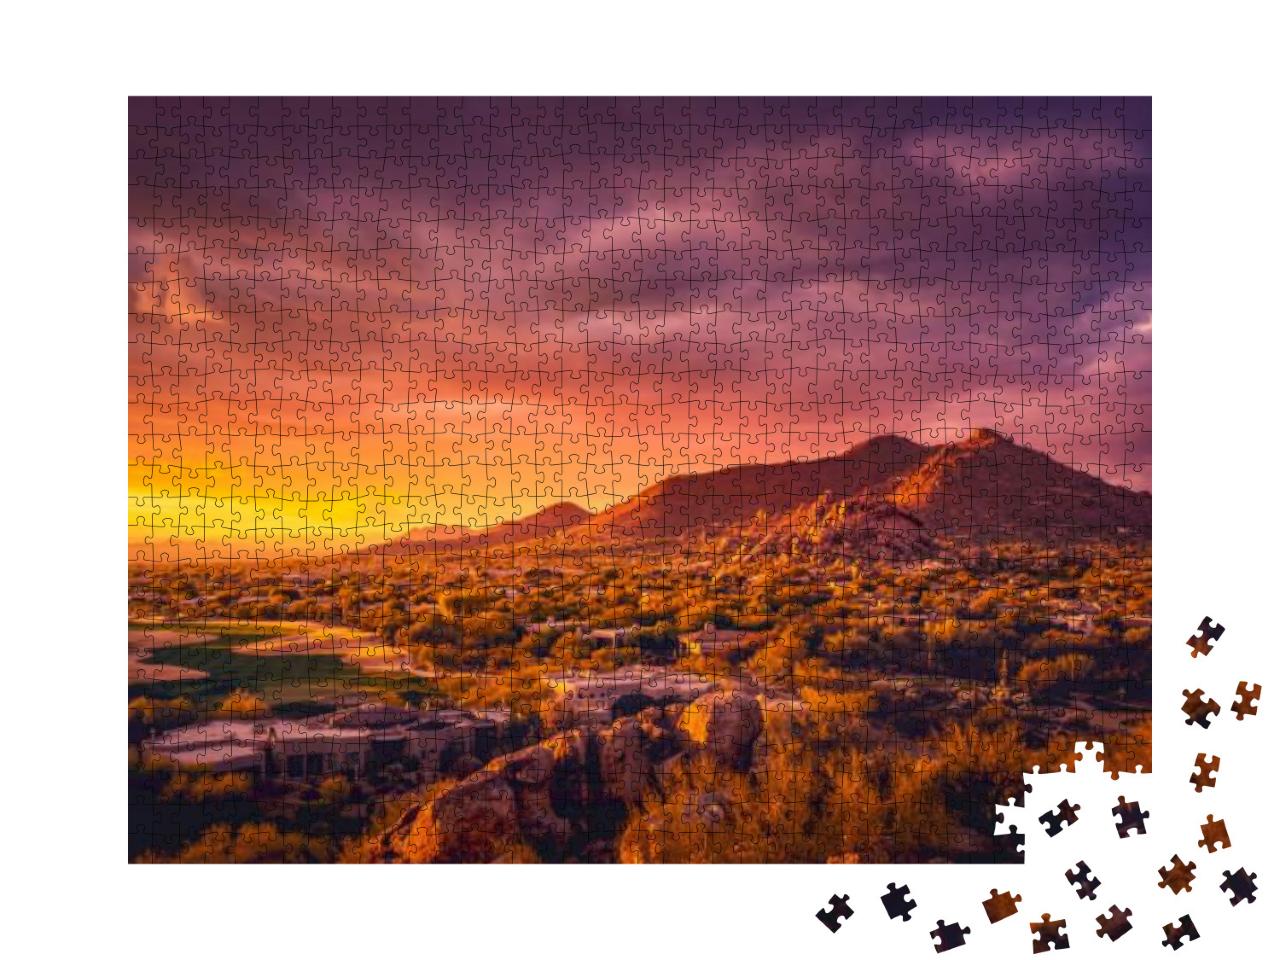 Scottsdale Arizona Desert Landscape, Usa... Jigsaw Puzzle with 1000 pieces